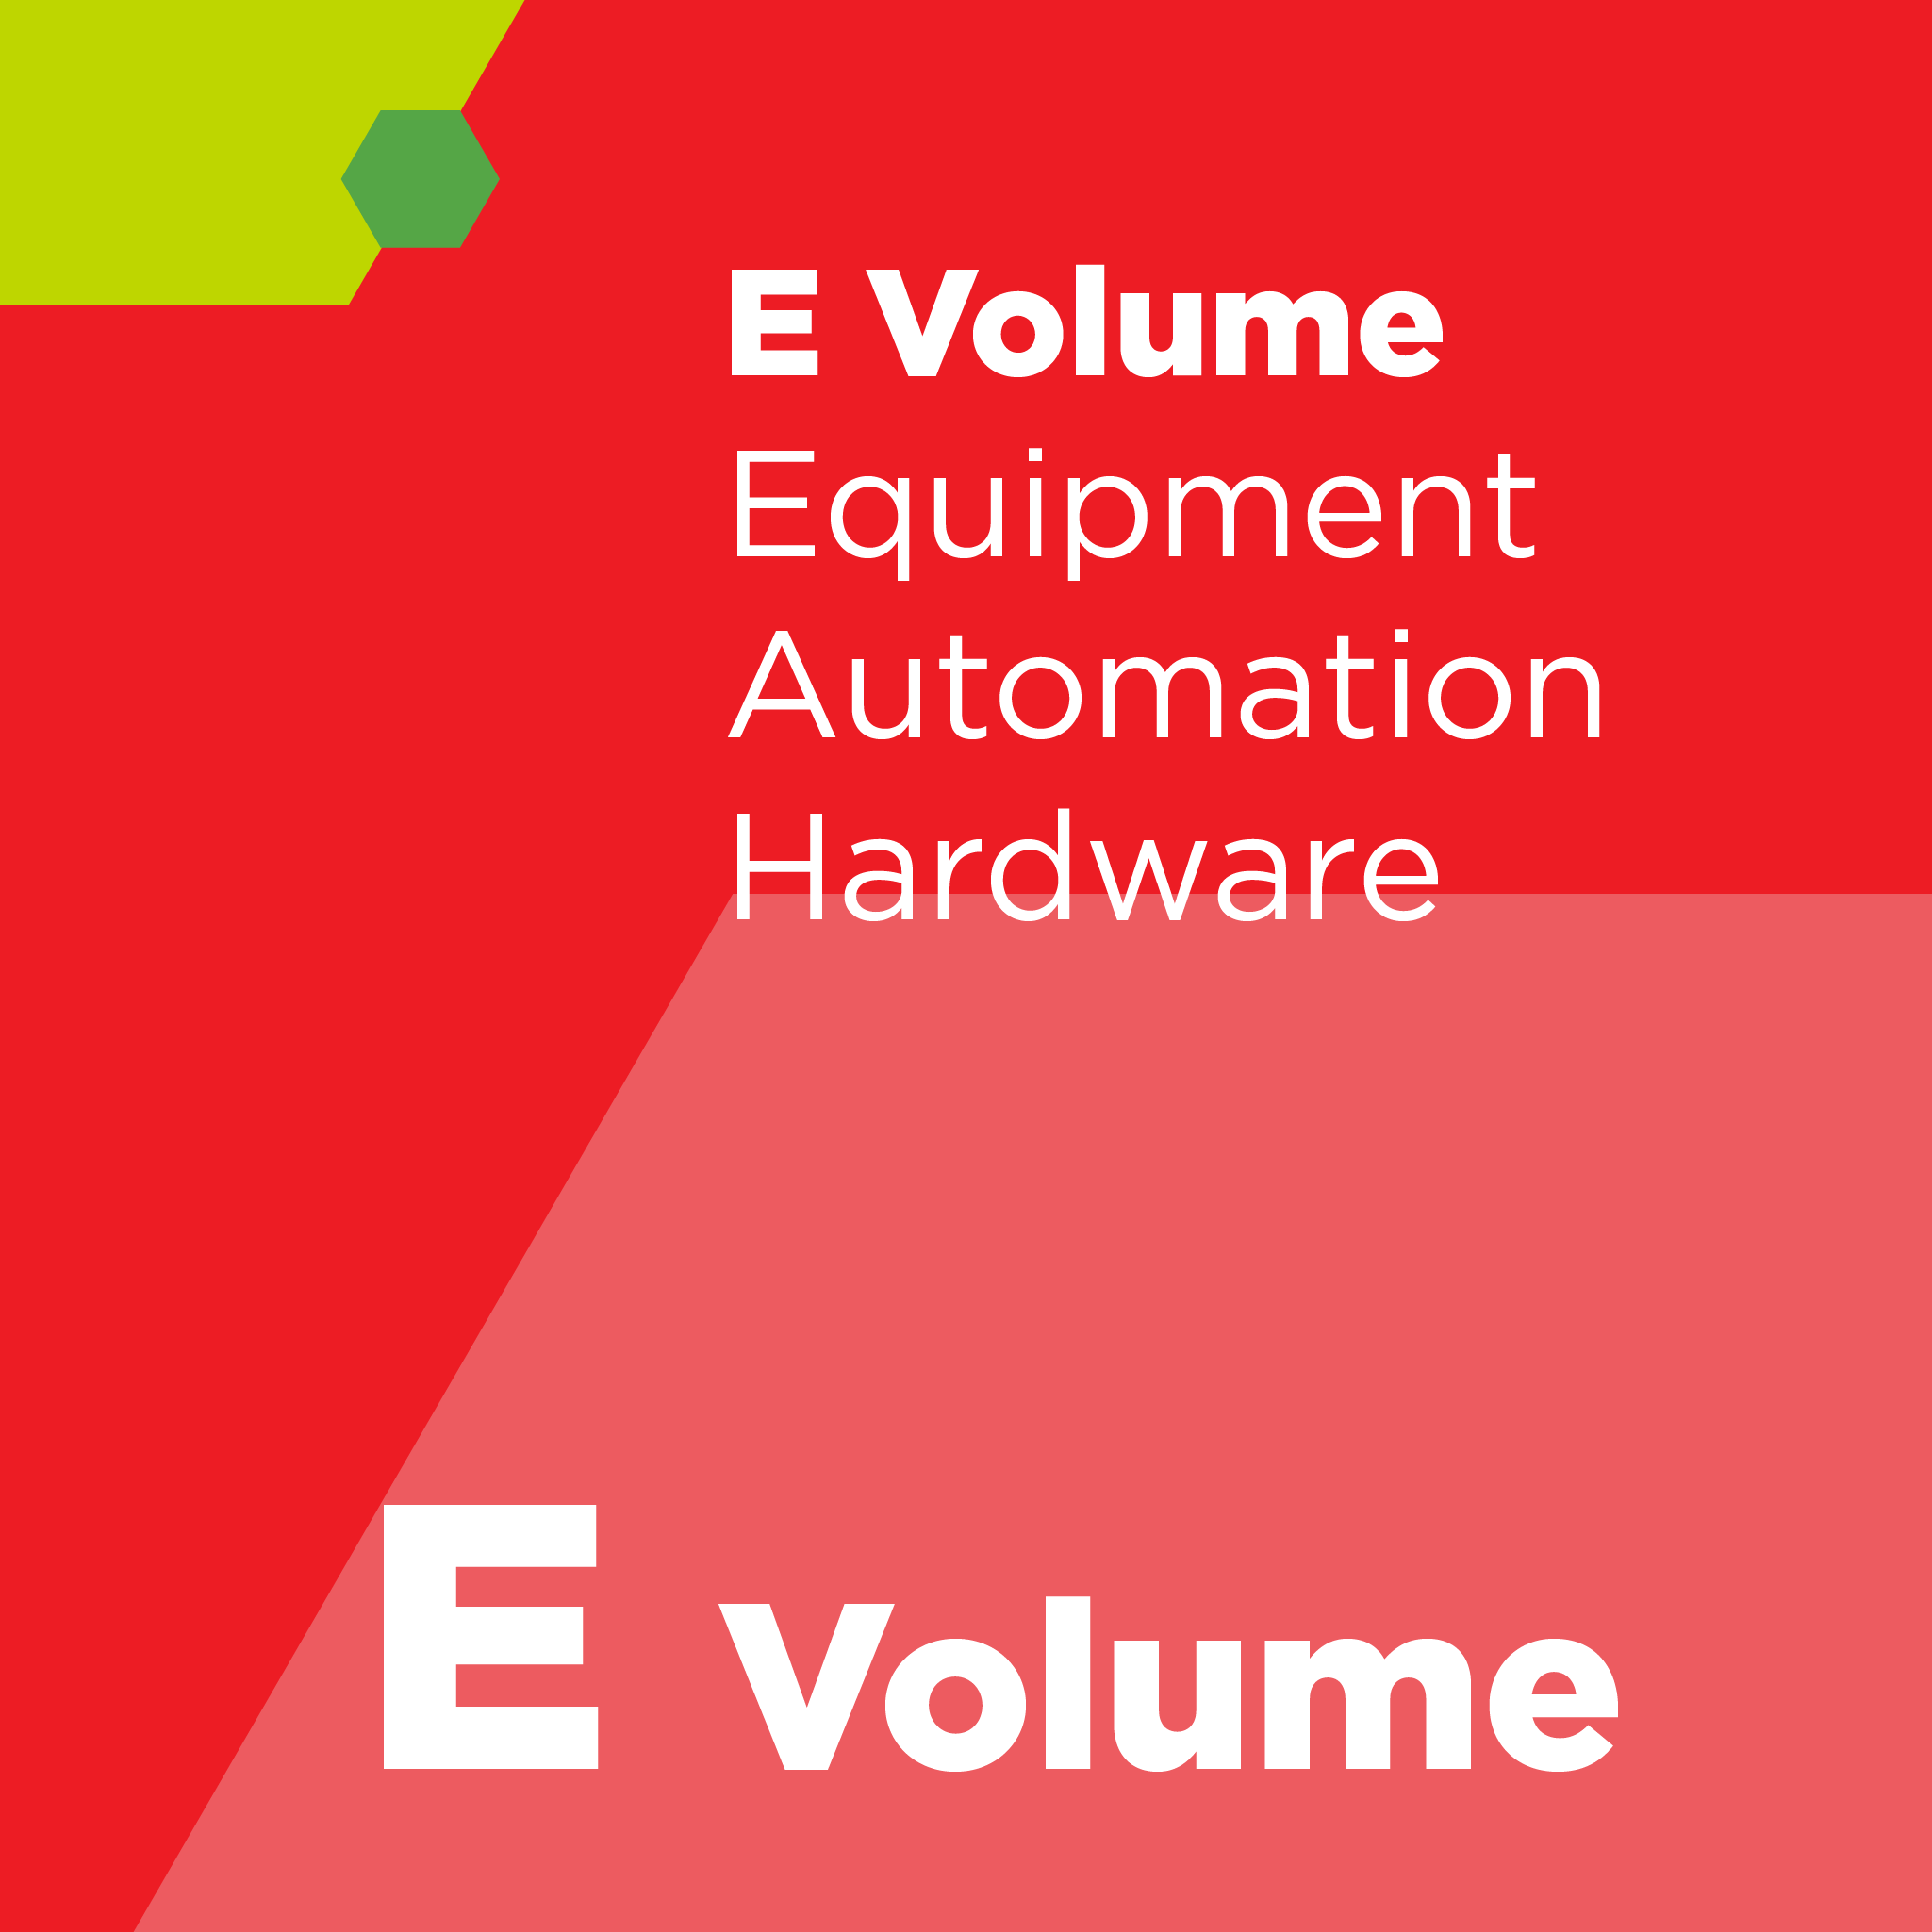 E02900 - SEMI E29 - マスフローコントローラ及びマスフローメータの校正のための標準用語